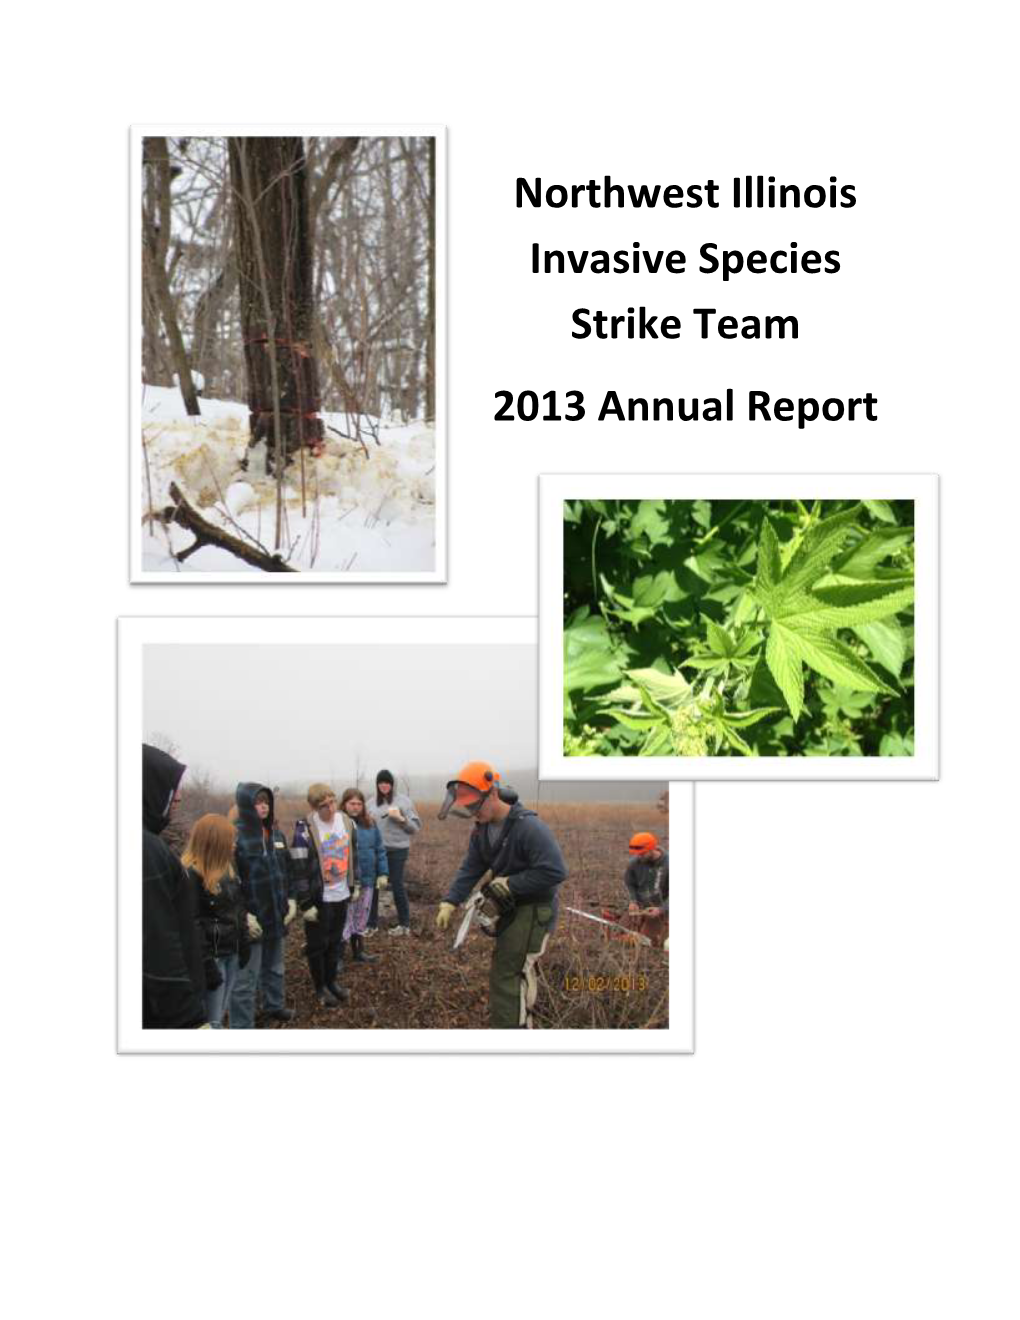 Northwest Illinois Invasive Species Strike Team 2013 Annual Report